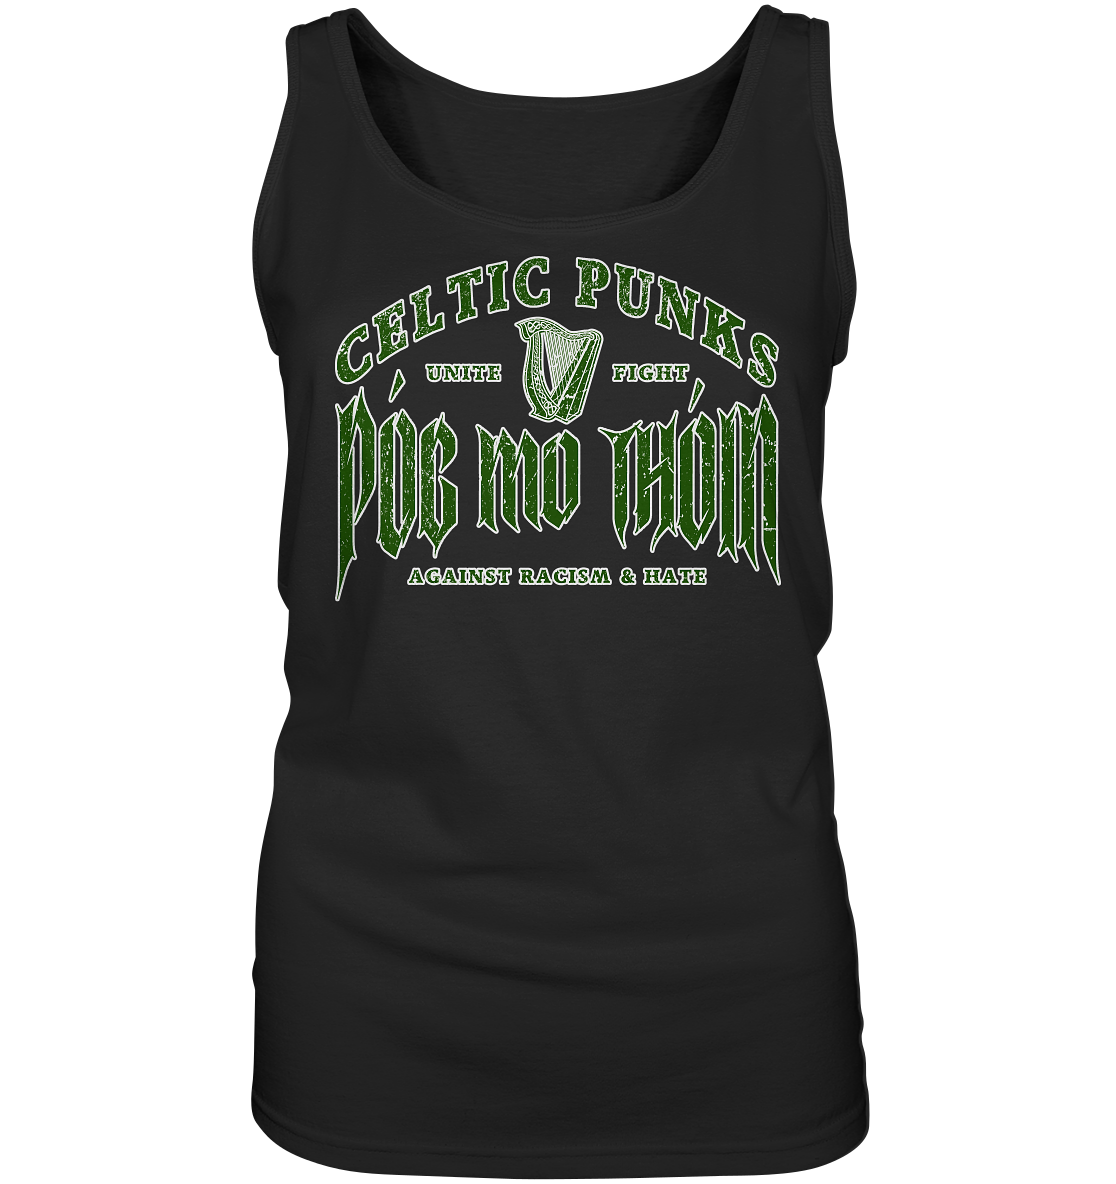 Póg Mo Thóin Streetwear "Celtic Punks Against Racism & Hate / Unite & Fight" - Ladies Tank-Top